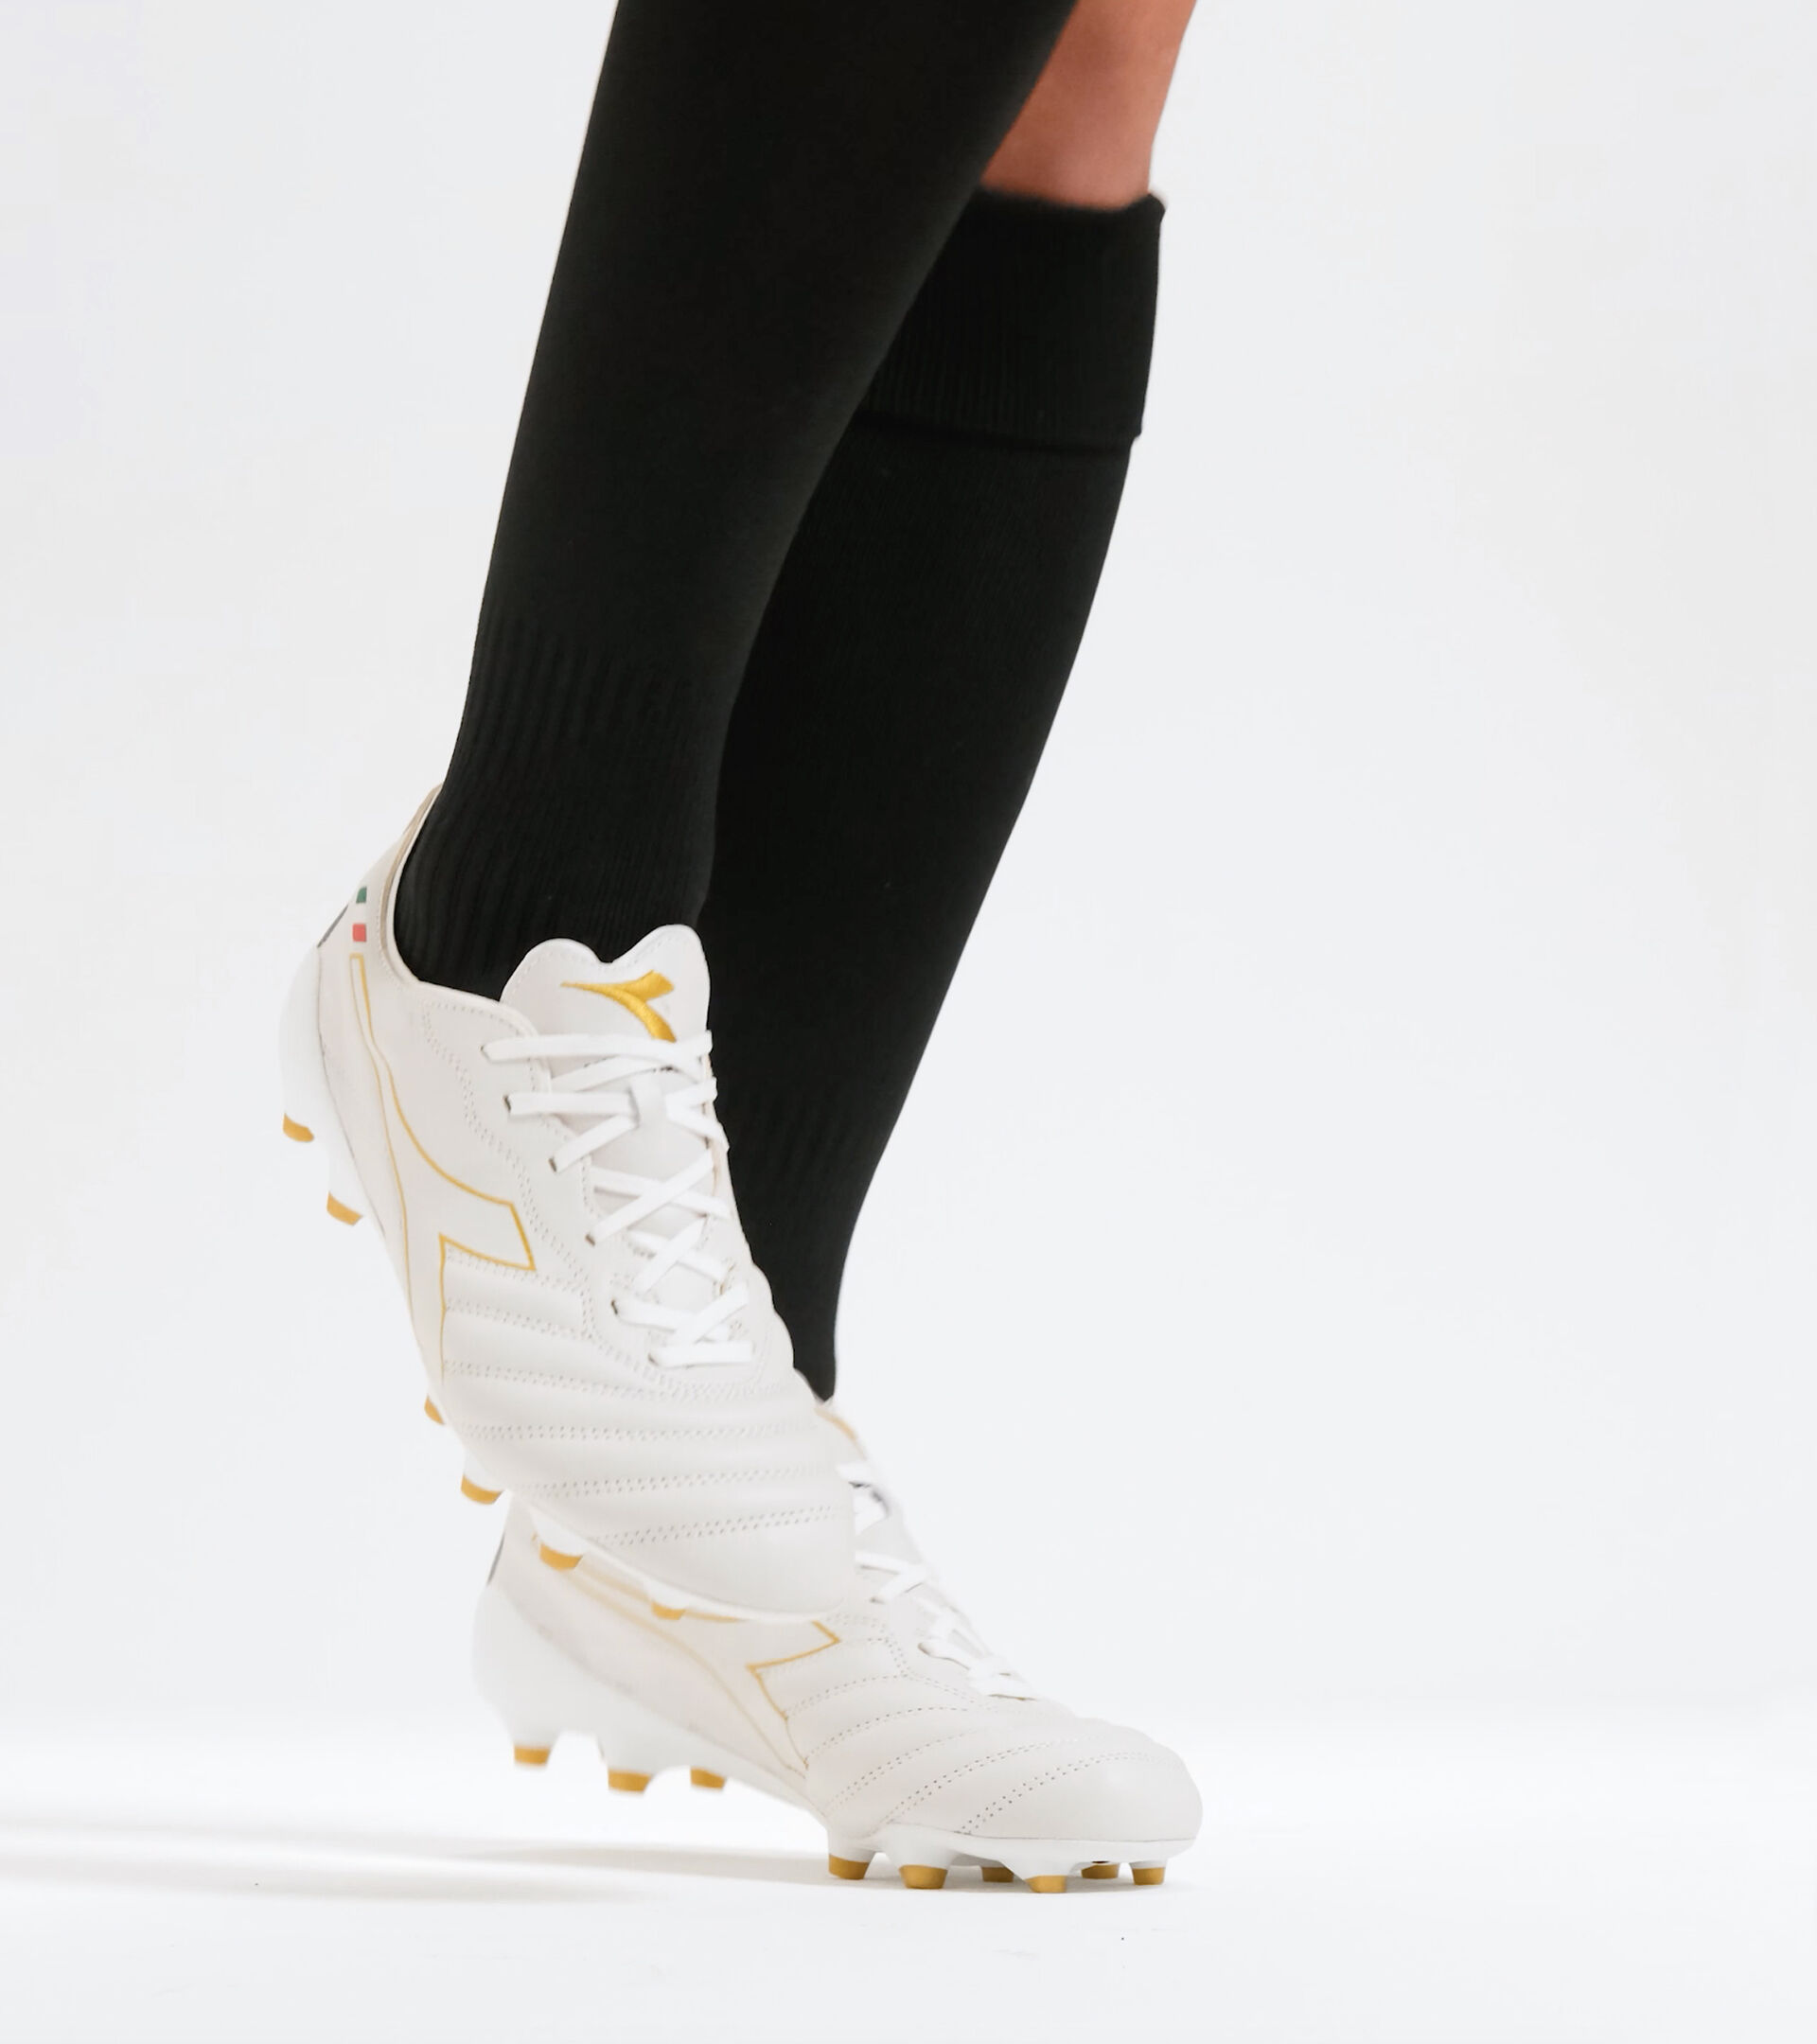 Firm ground football boots - Made in Italy BRASIL ELITE TECH ITA LPX WHITE/GOLD - Diadora